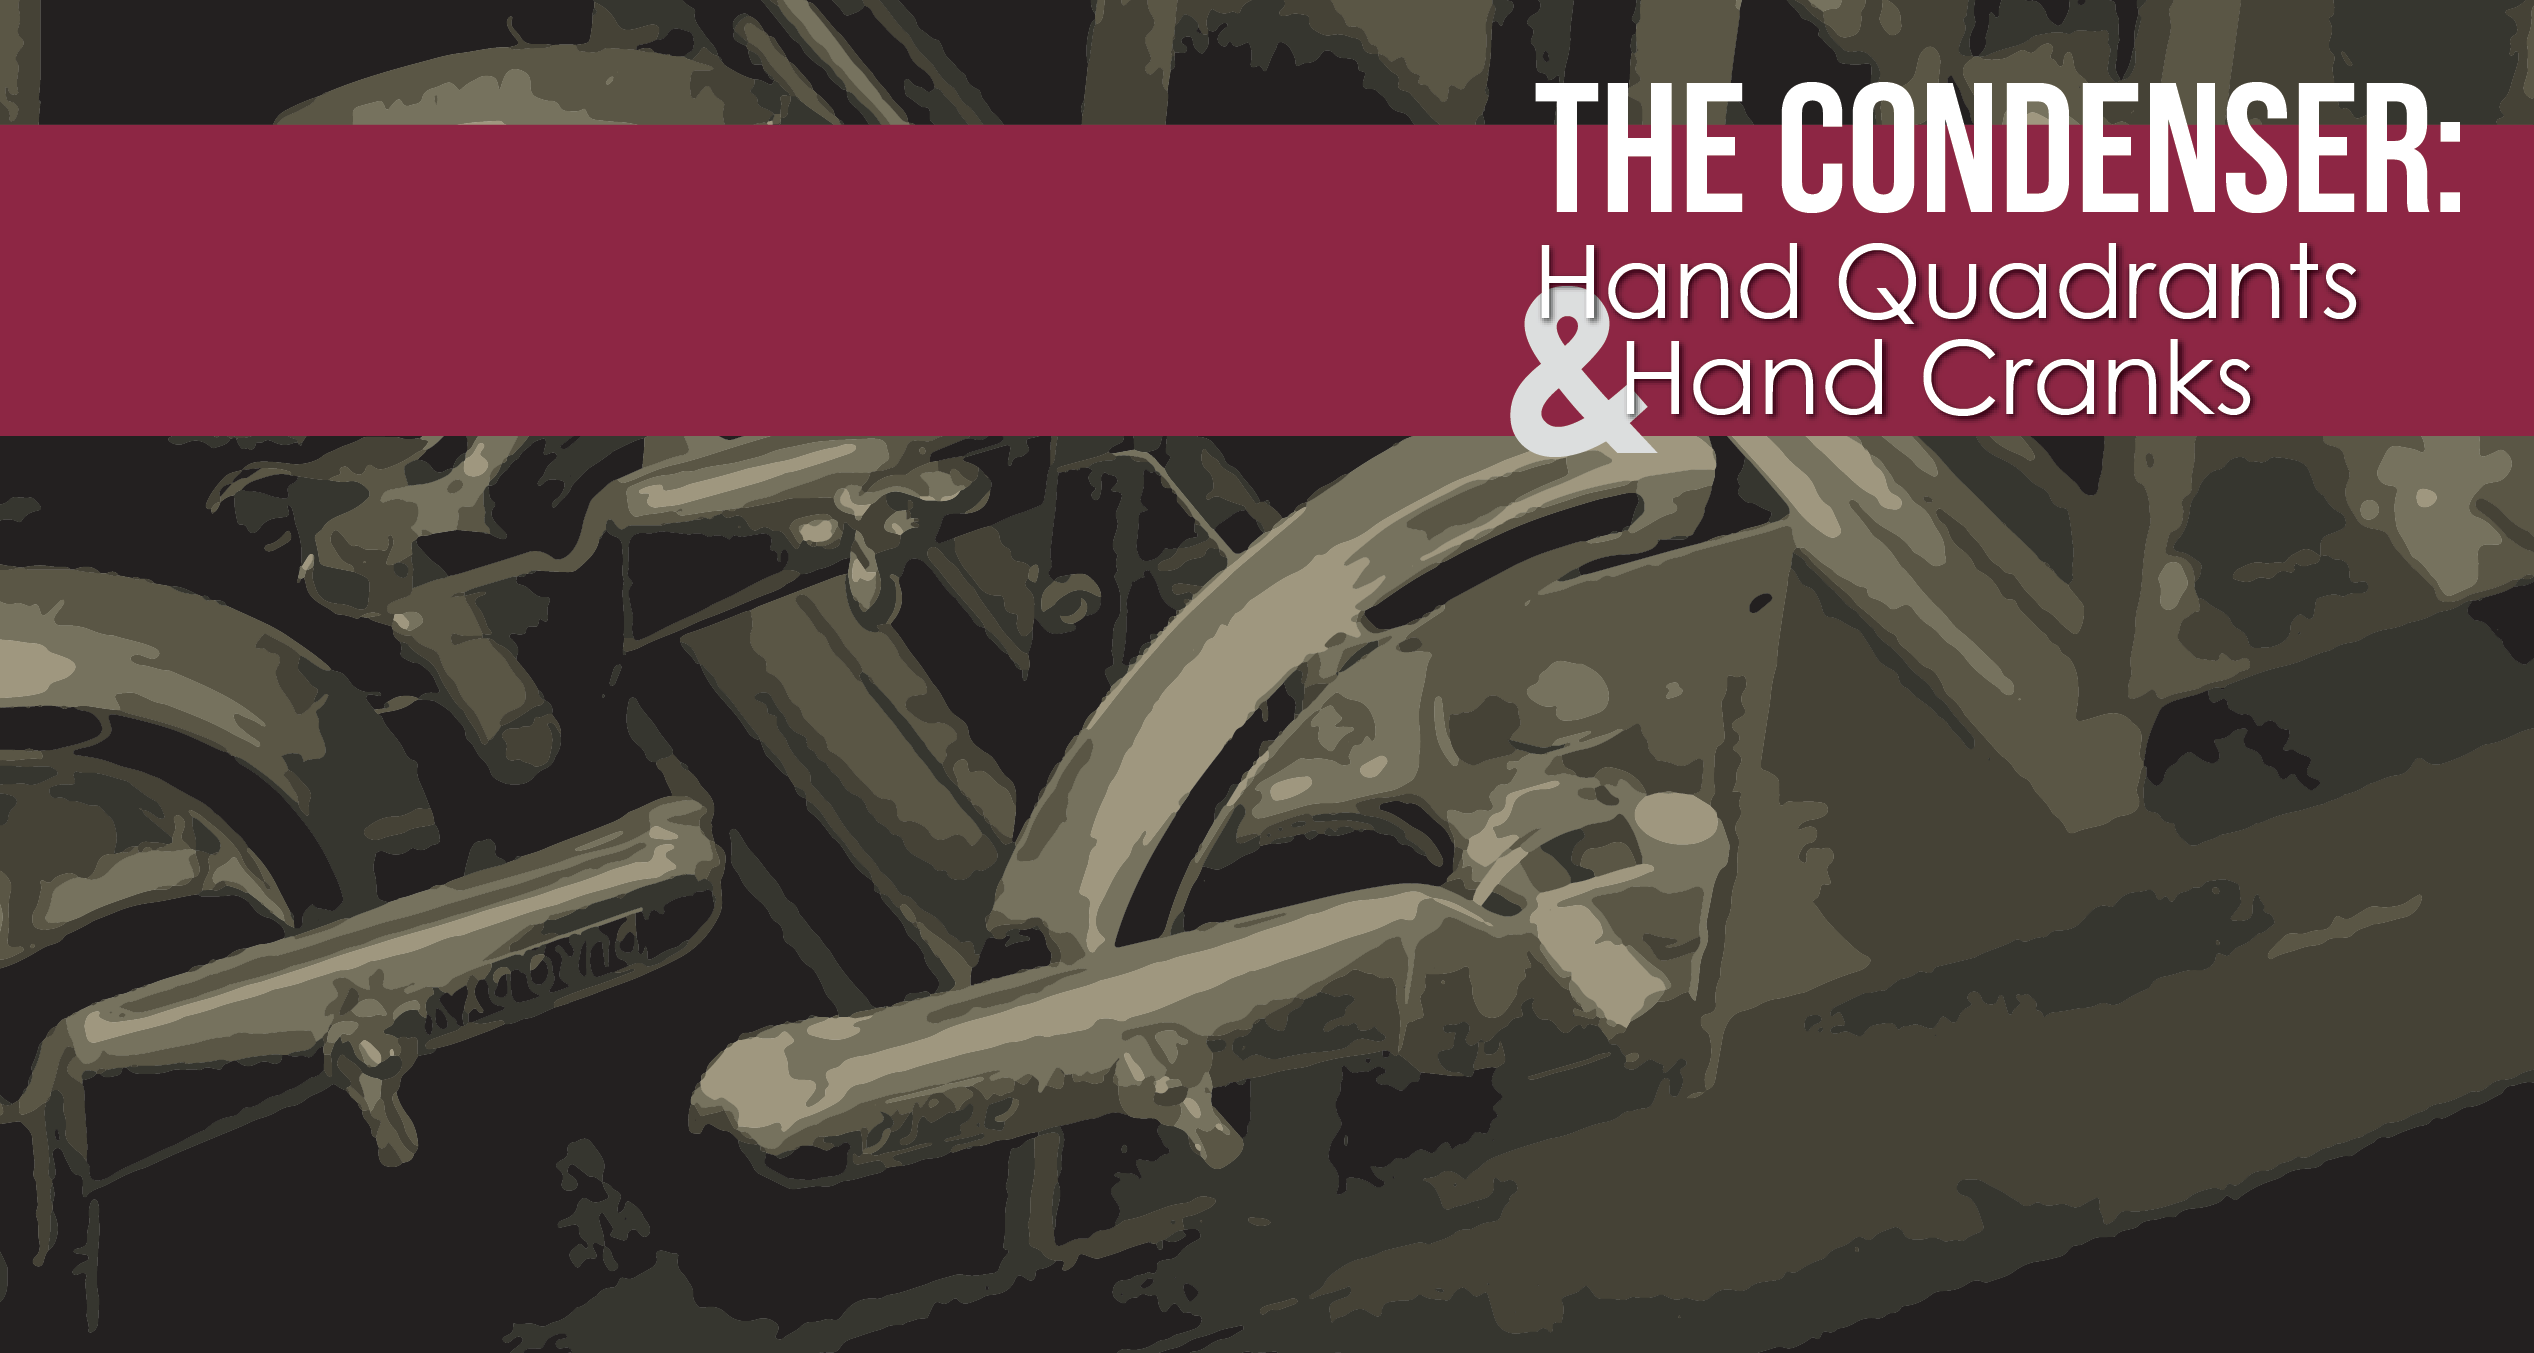 The Condenser - Hand Quadrants and Cranks